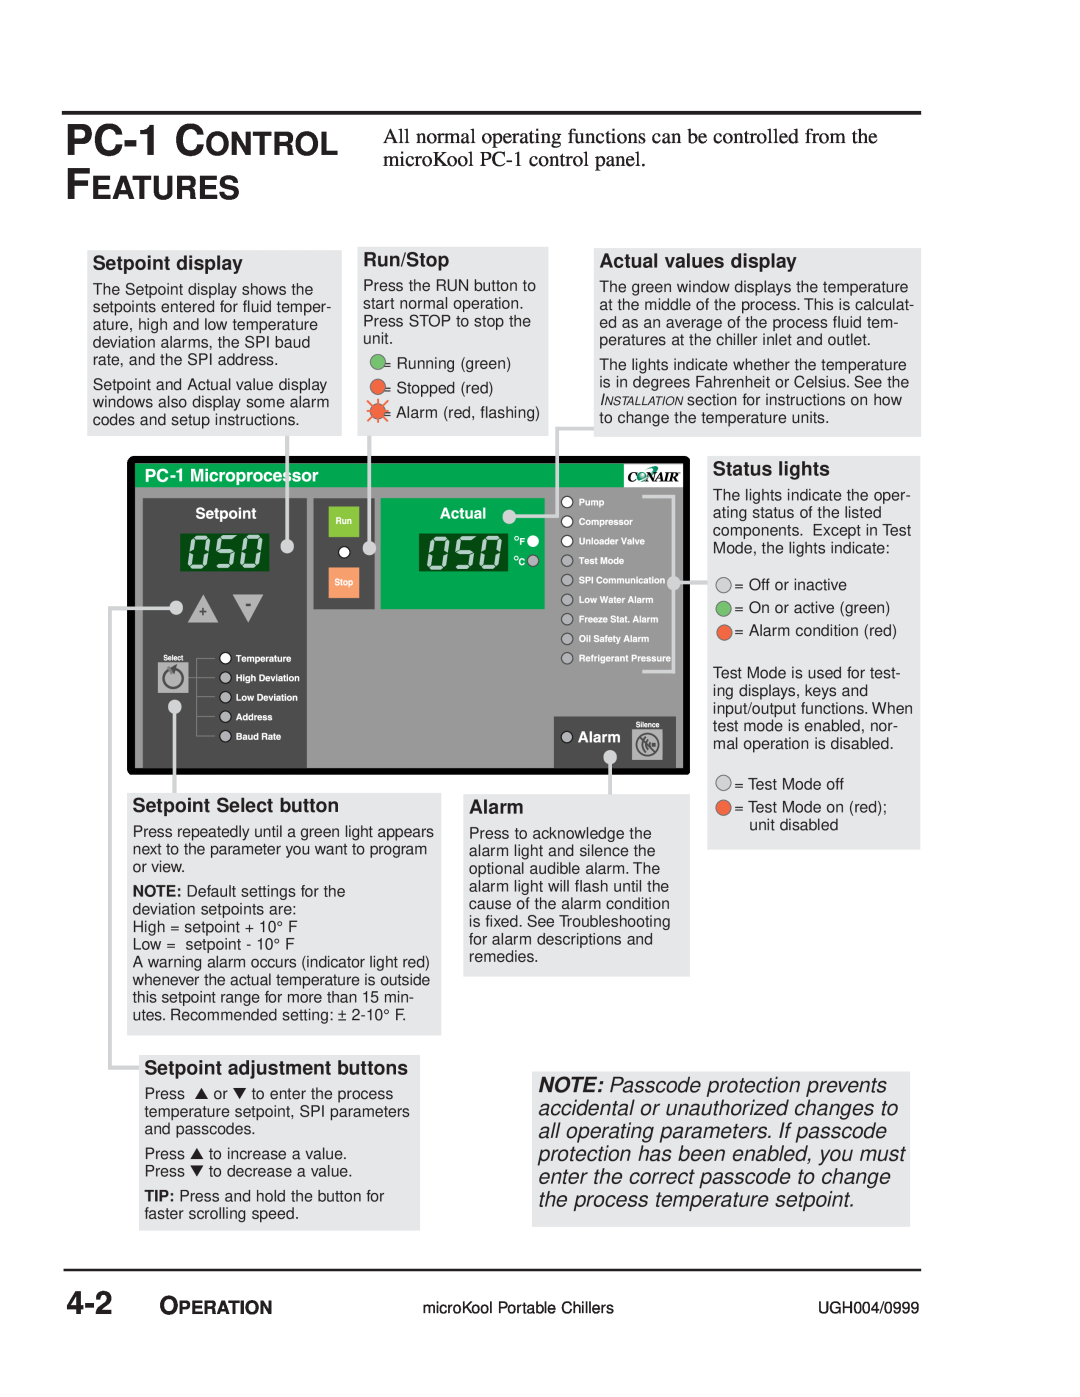 Conair MPA PC-1 CONTROL FEATURES, Setpoint display, Run/Stop, Actual values display, Setpoint Select button, Status lights 